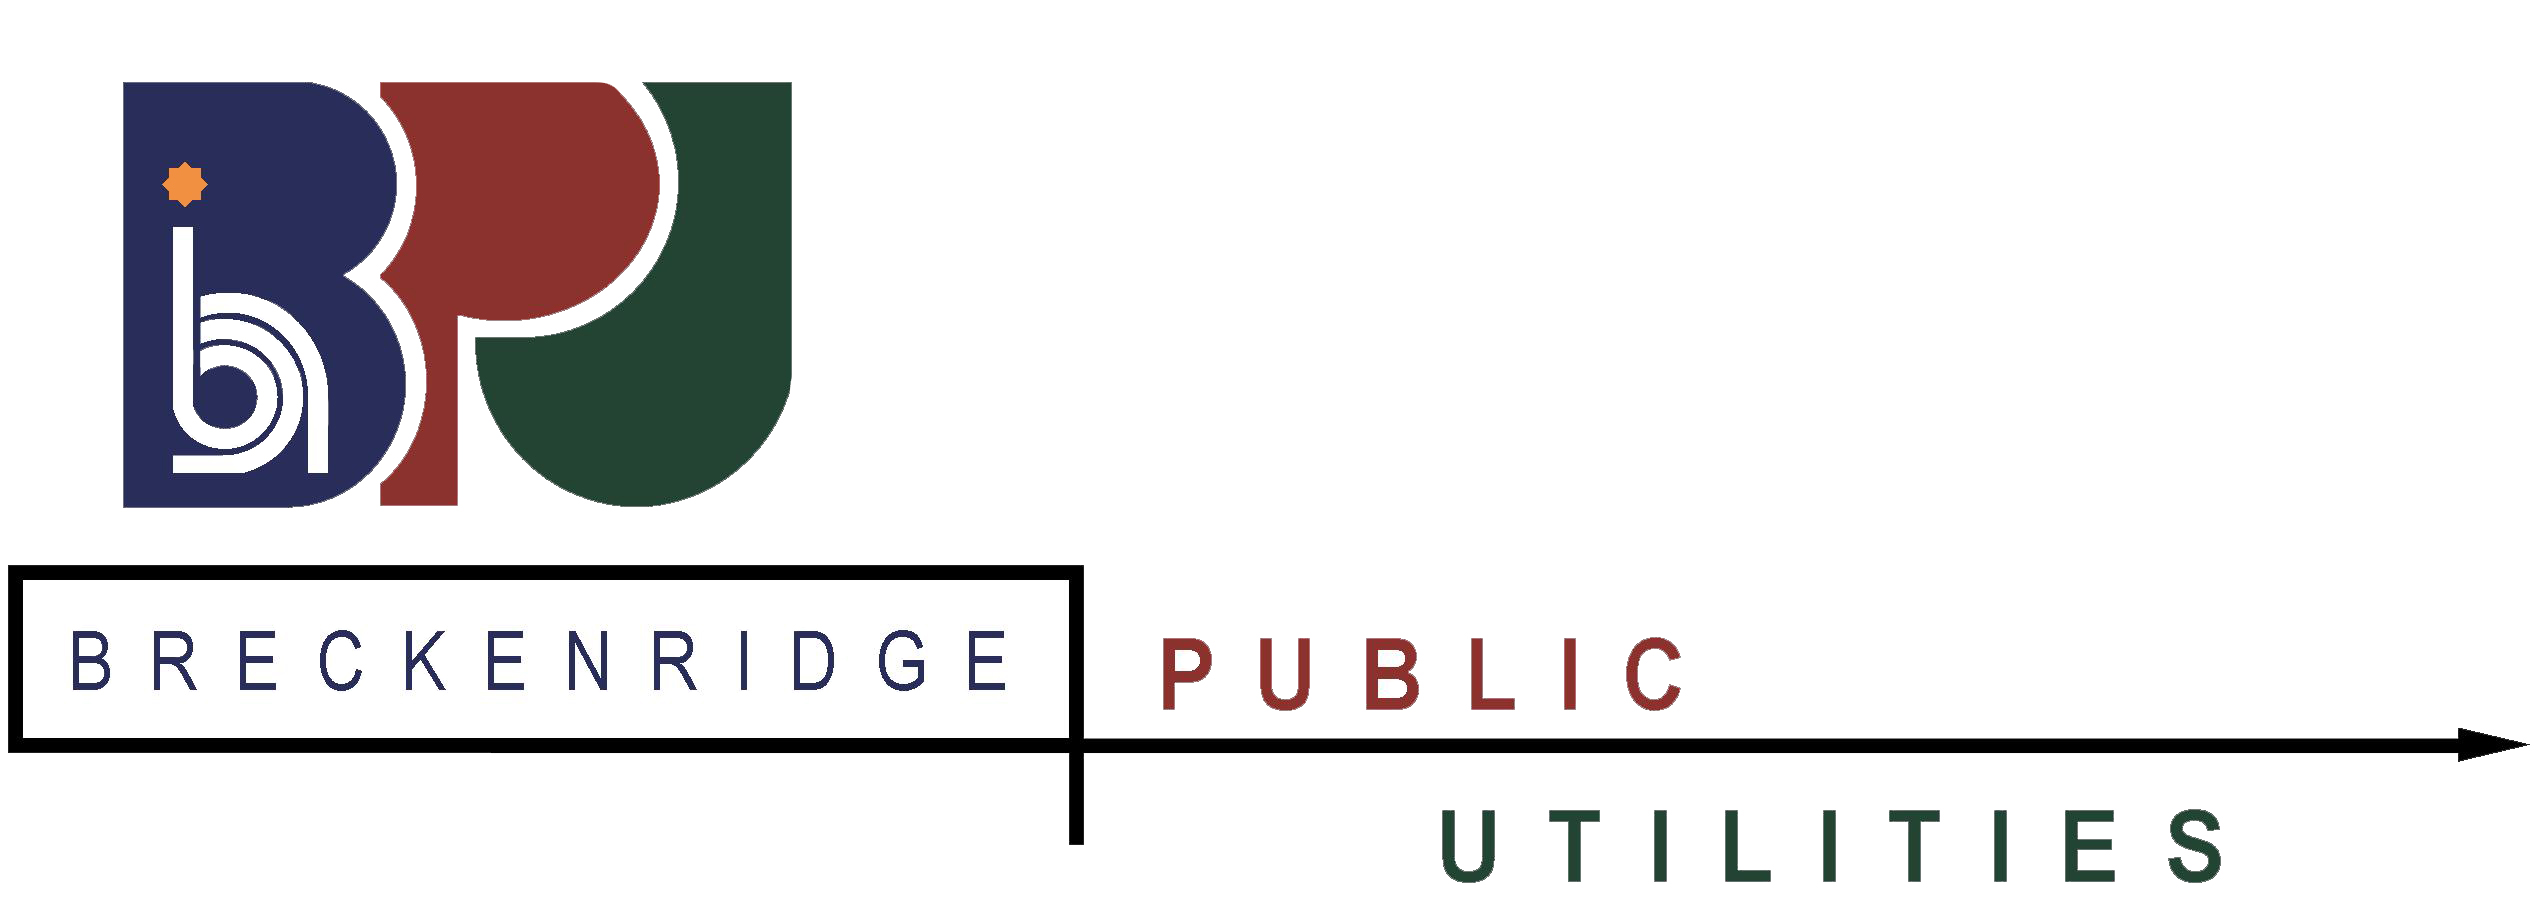 Breckenridge Public Utilities Logo.png